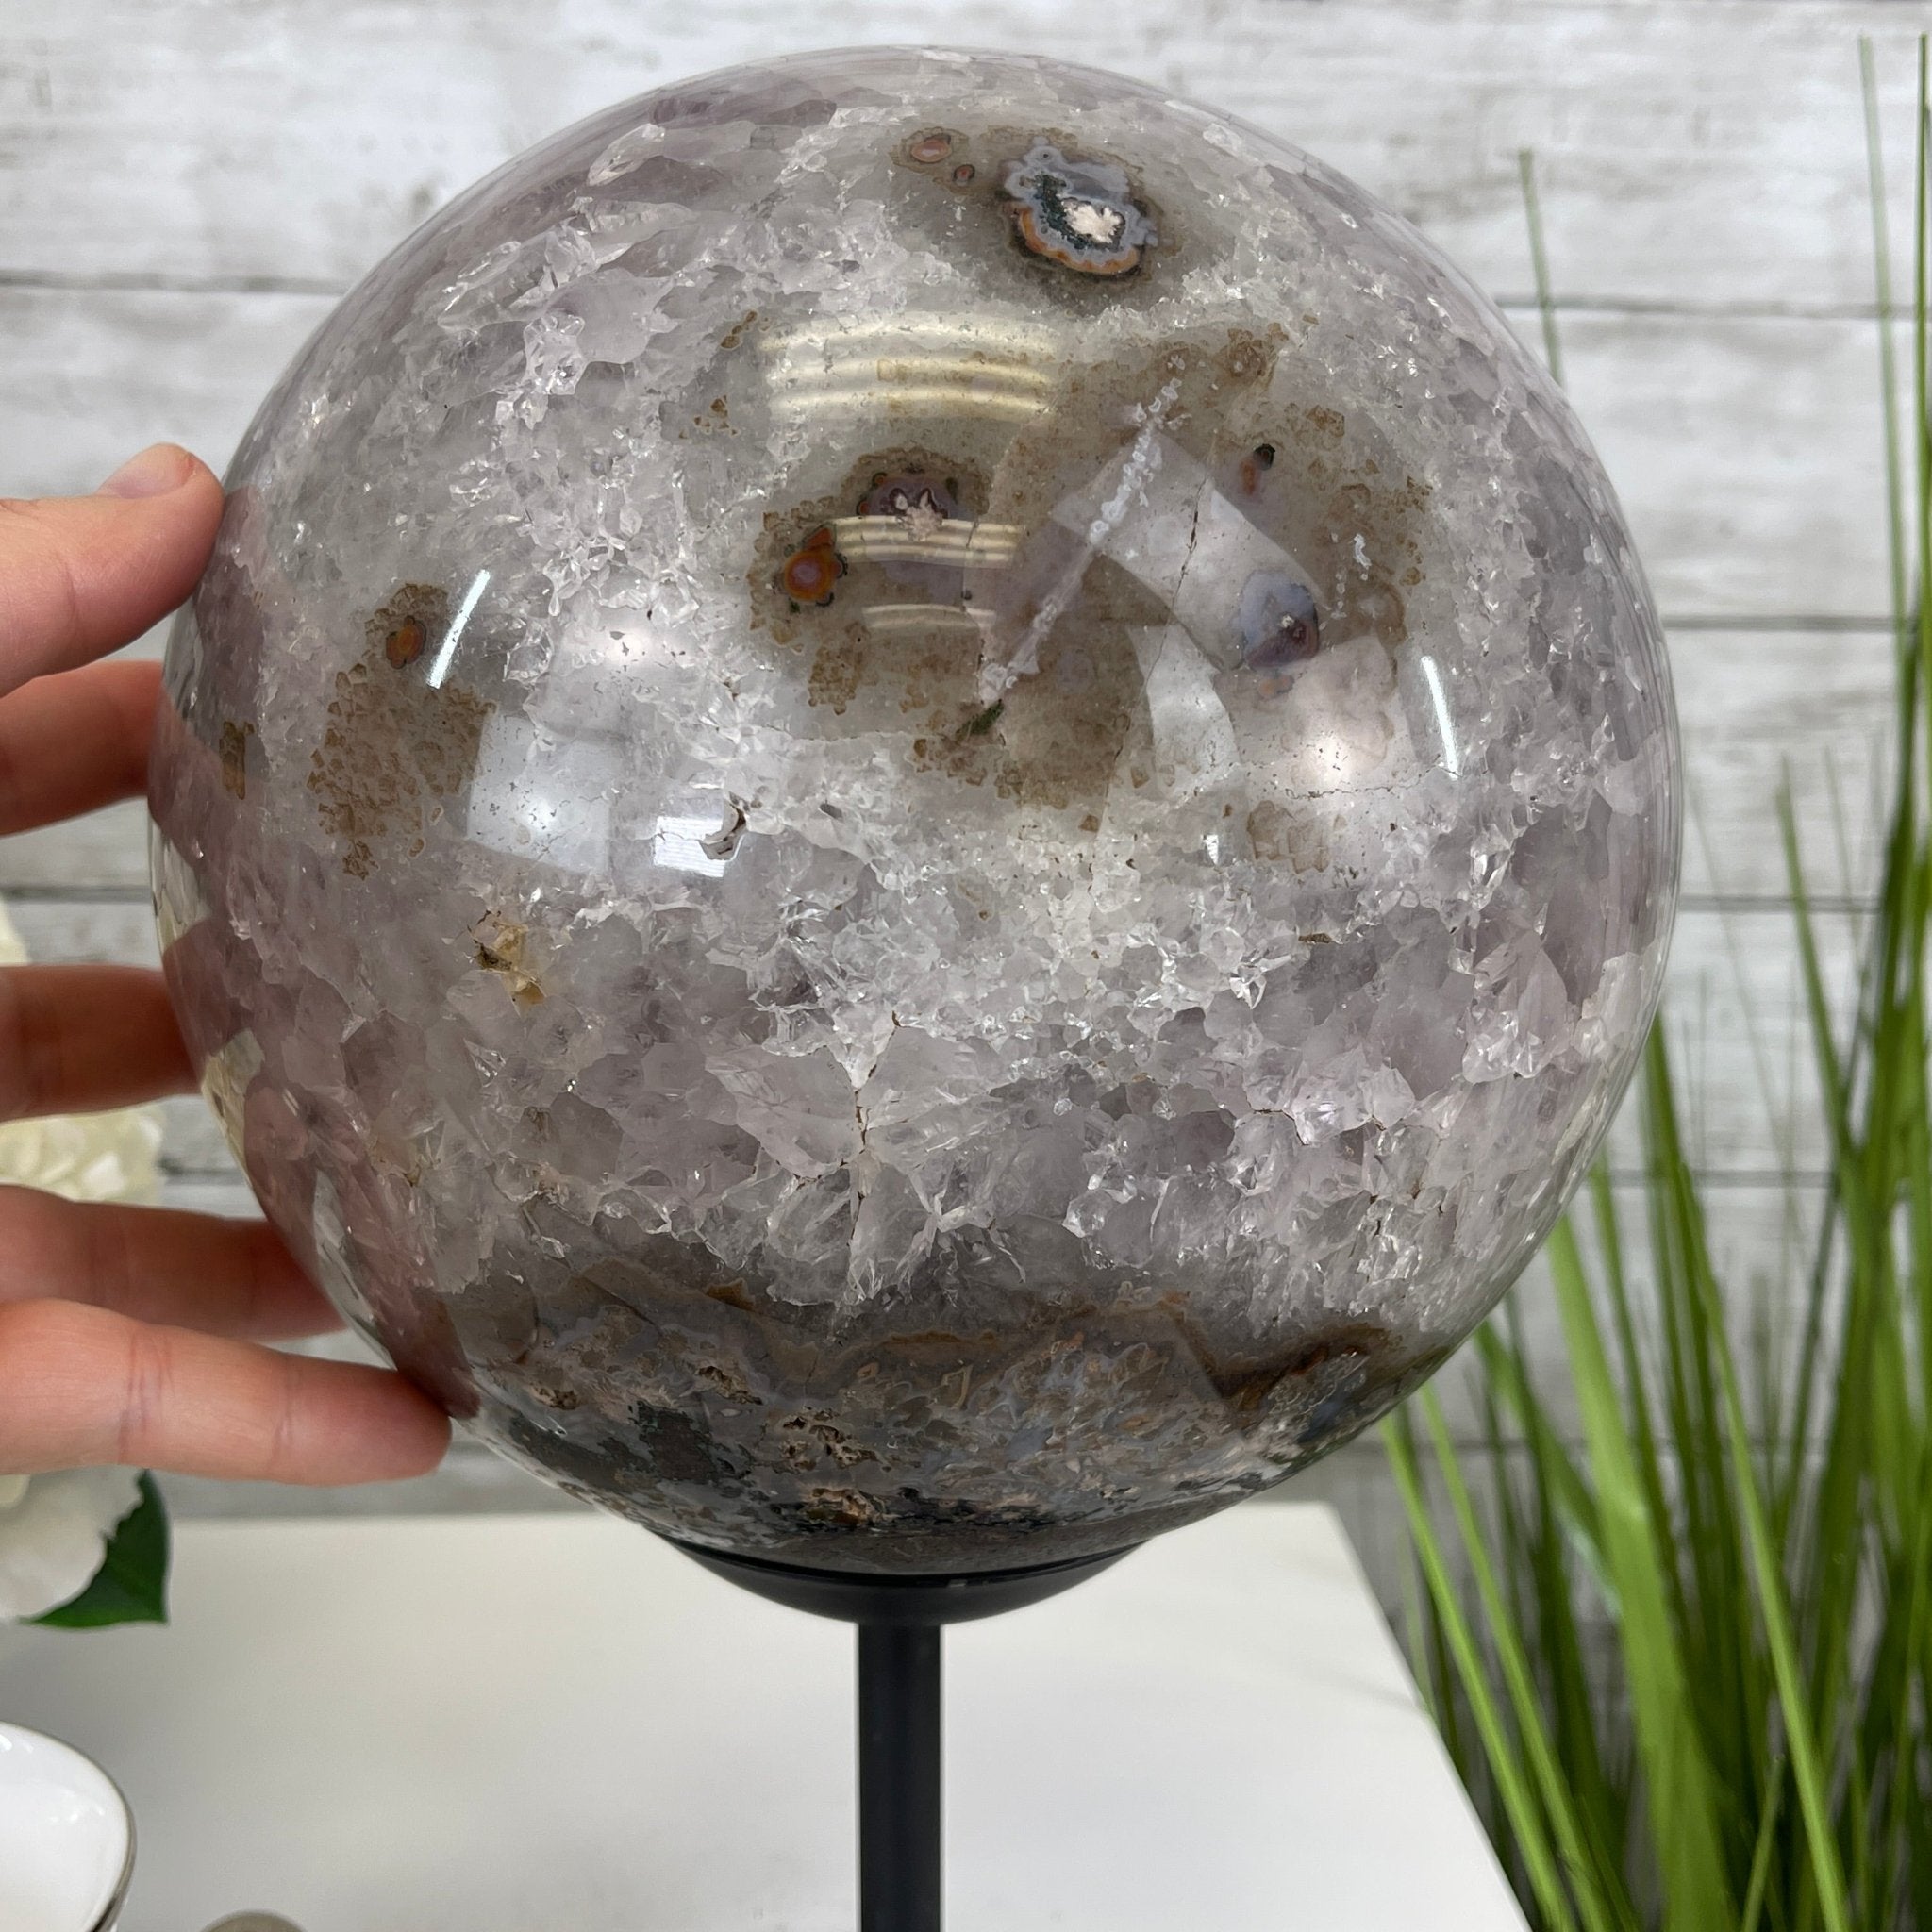 Amethyst Sphere on a Metal Base 20.2 lbs & 12.1" Tall Model #5630-0002 by Brazil Gems - Brazil GemsBrazil GemsAmethyst Sphere on a Metal Base 20.2 lbs & 12.1" Tall Model #5630-0002 by Brazil GemsSpheres5630-0002